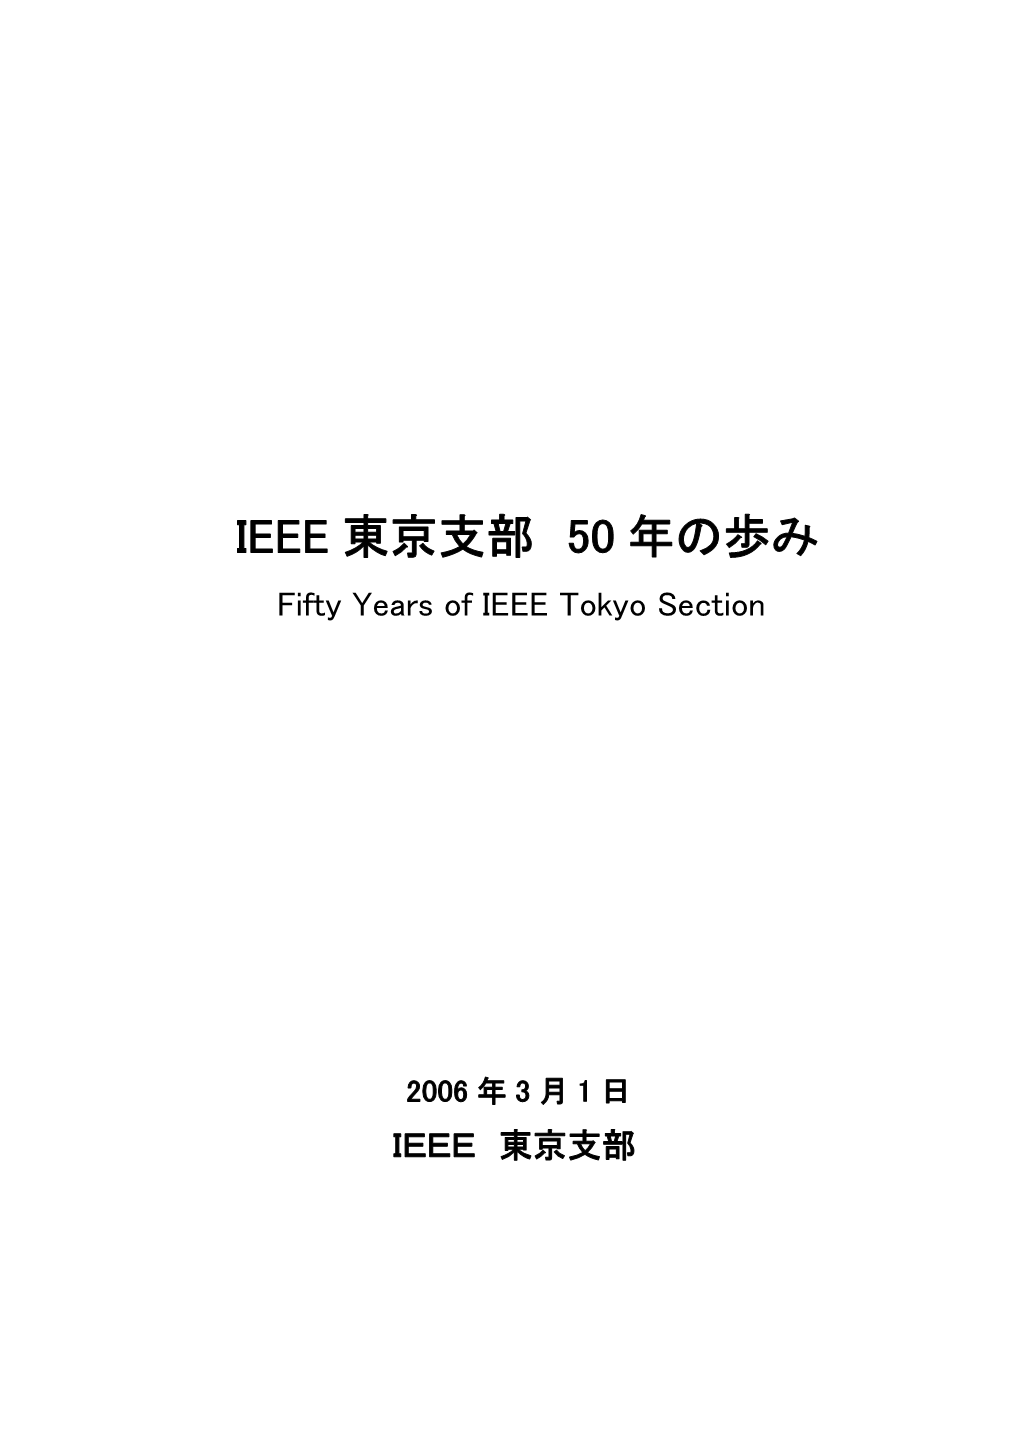 IEEE 東京支部 50 年の歩み Fifty Years of IEEE Tokyo Section